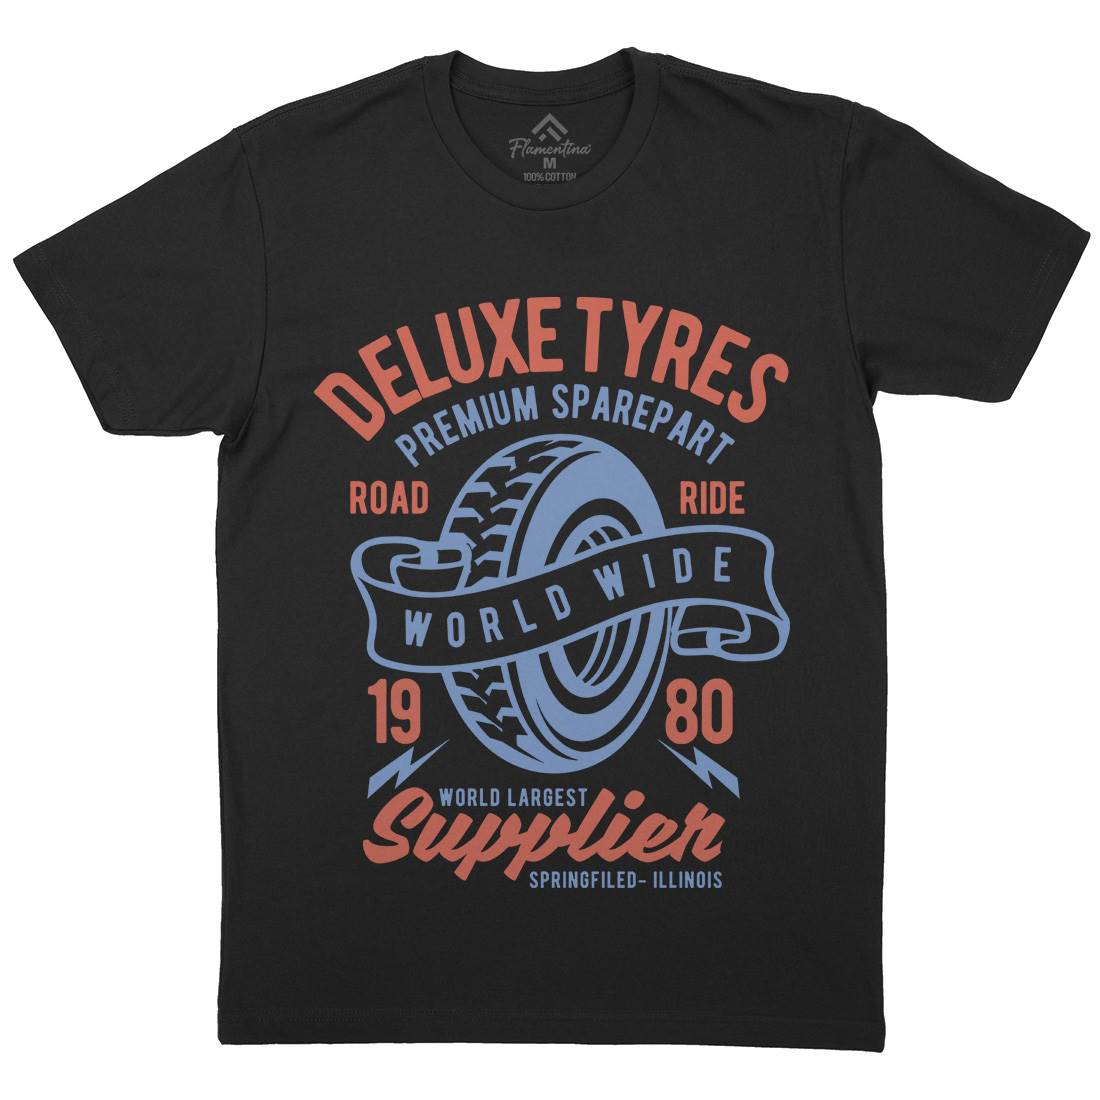 Deluxe Tyres Mens Crew Neck T-Shirt Cars B204